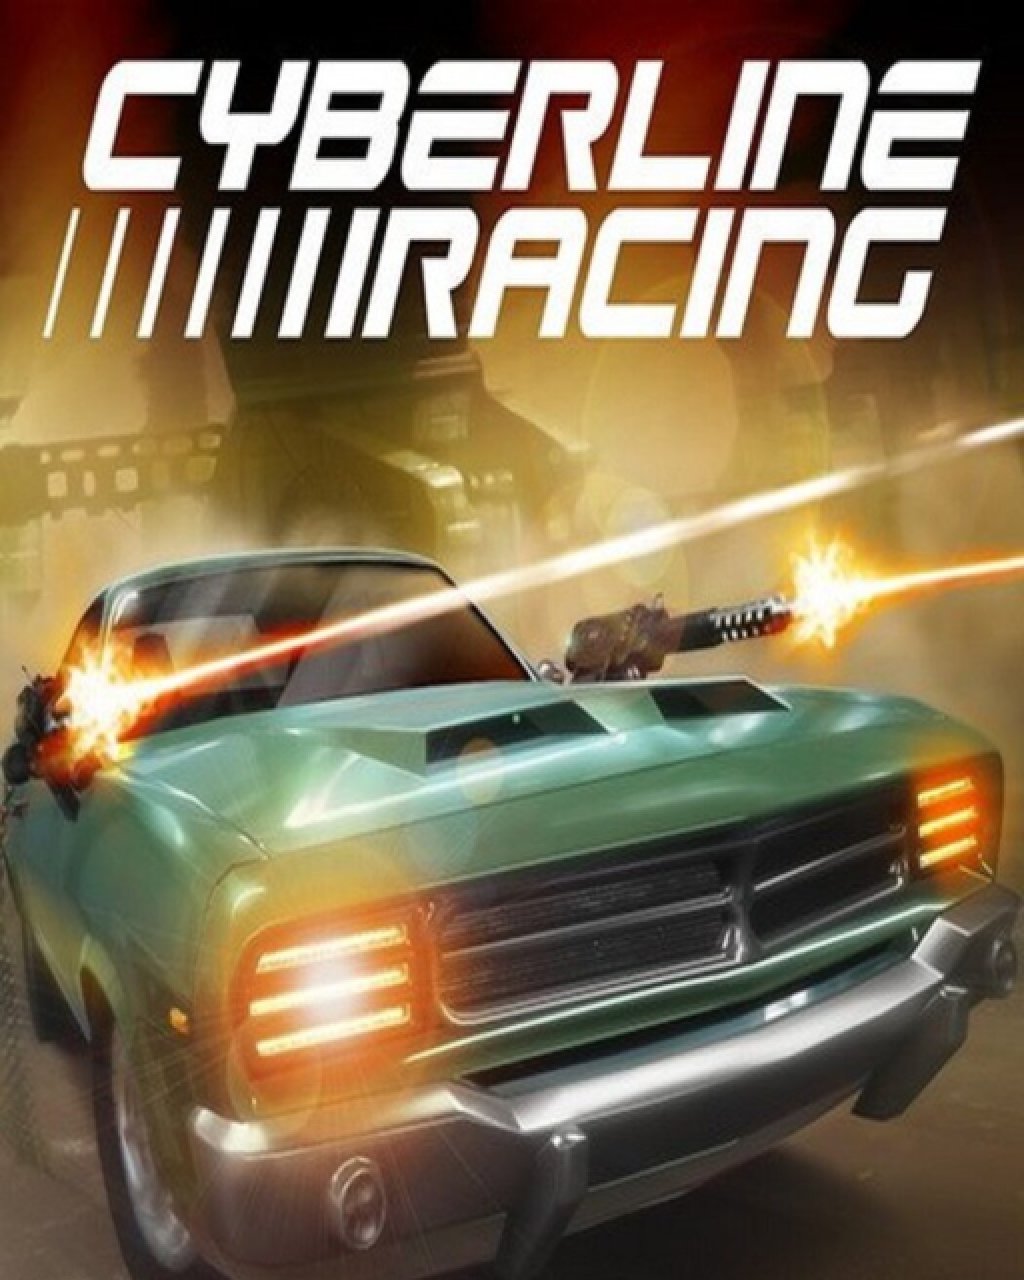 ESD Cyberline Racing